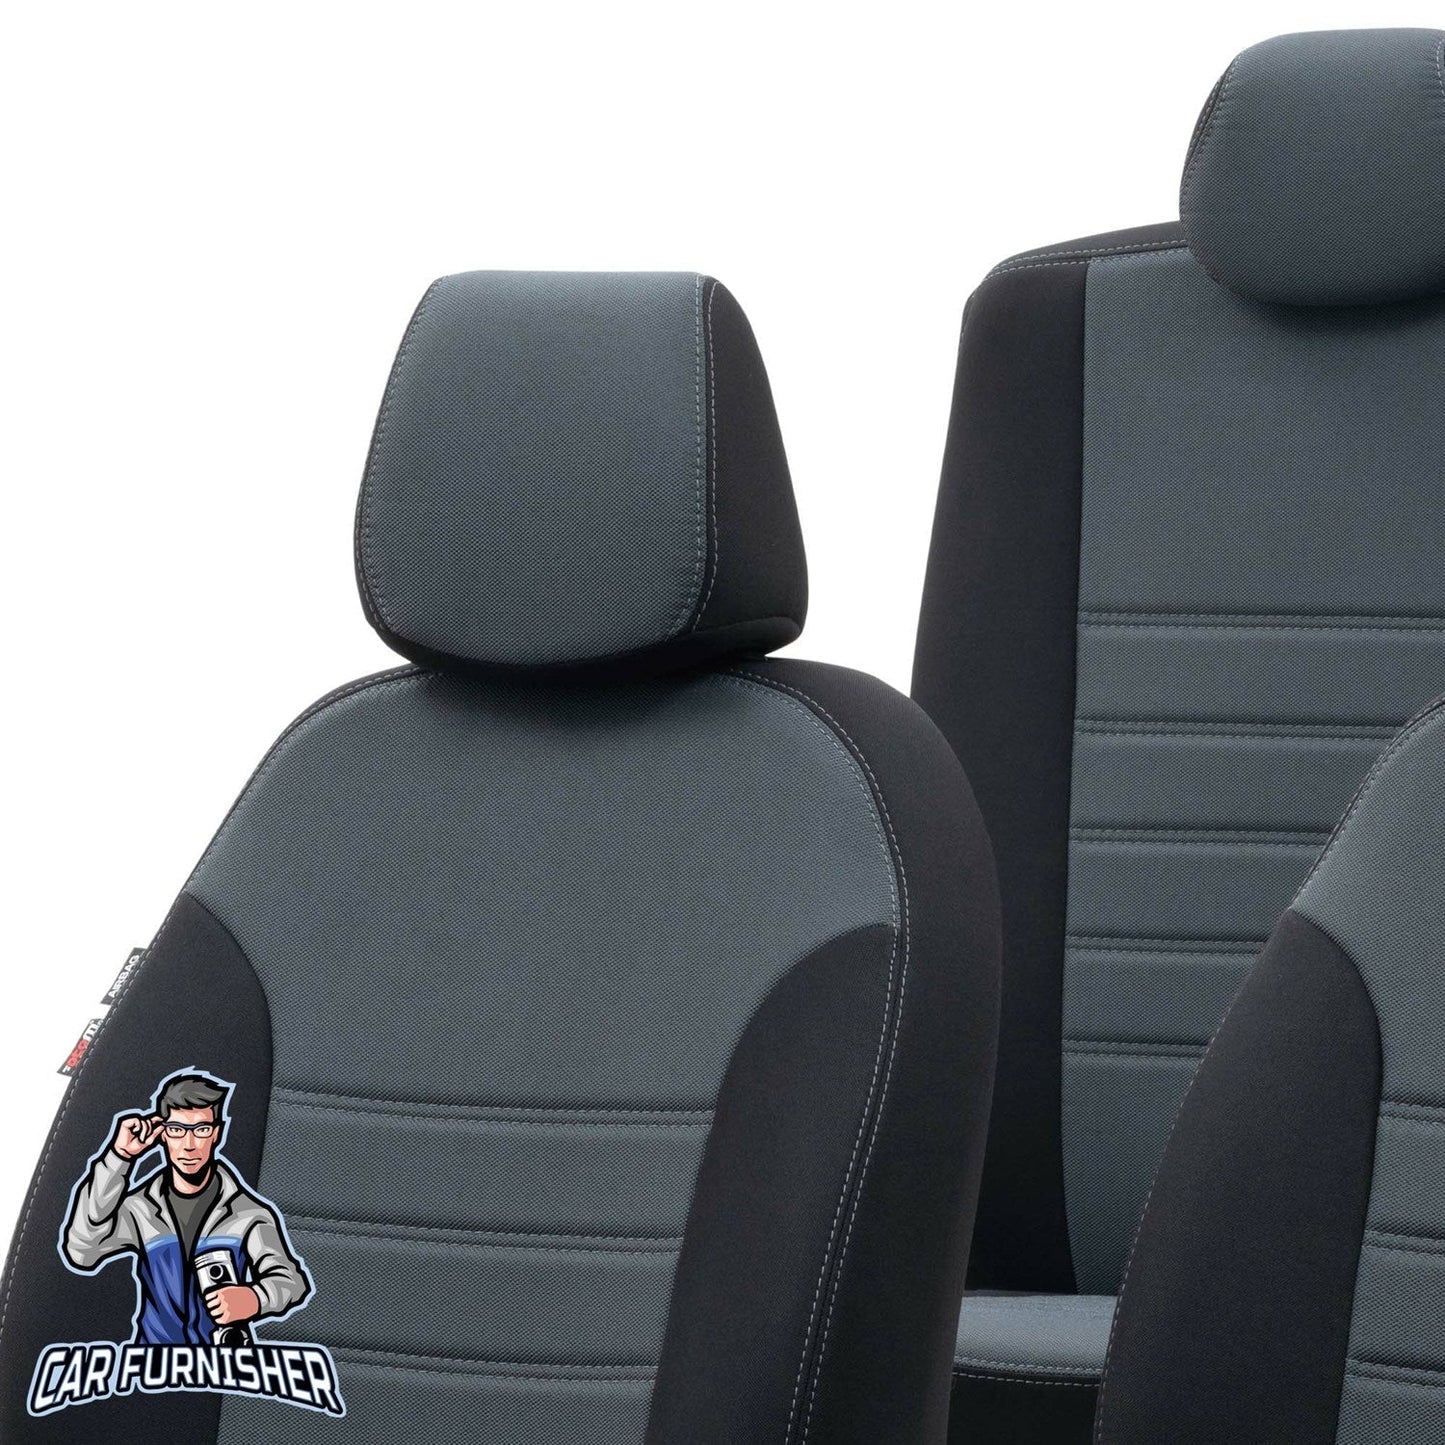 Peugeot 107 Seat Covers Original Jacquard Design Smoked Black Jacquard Fabric